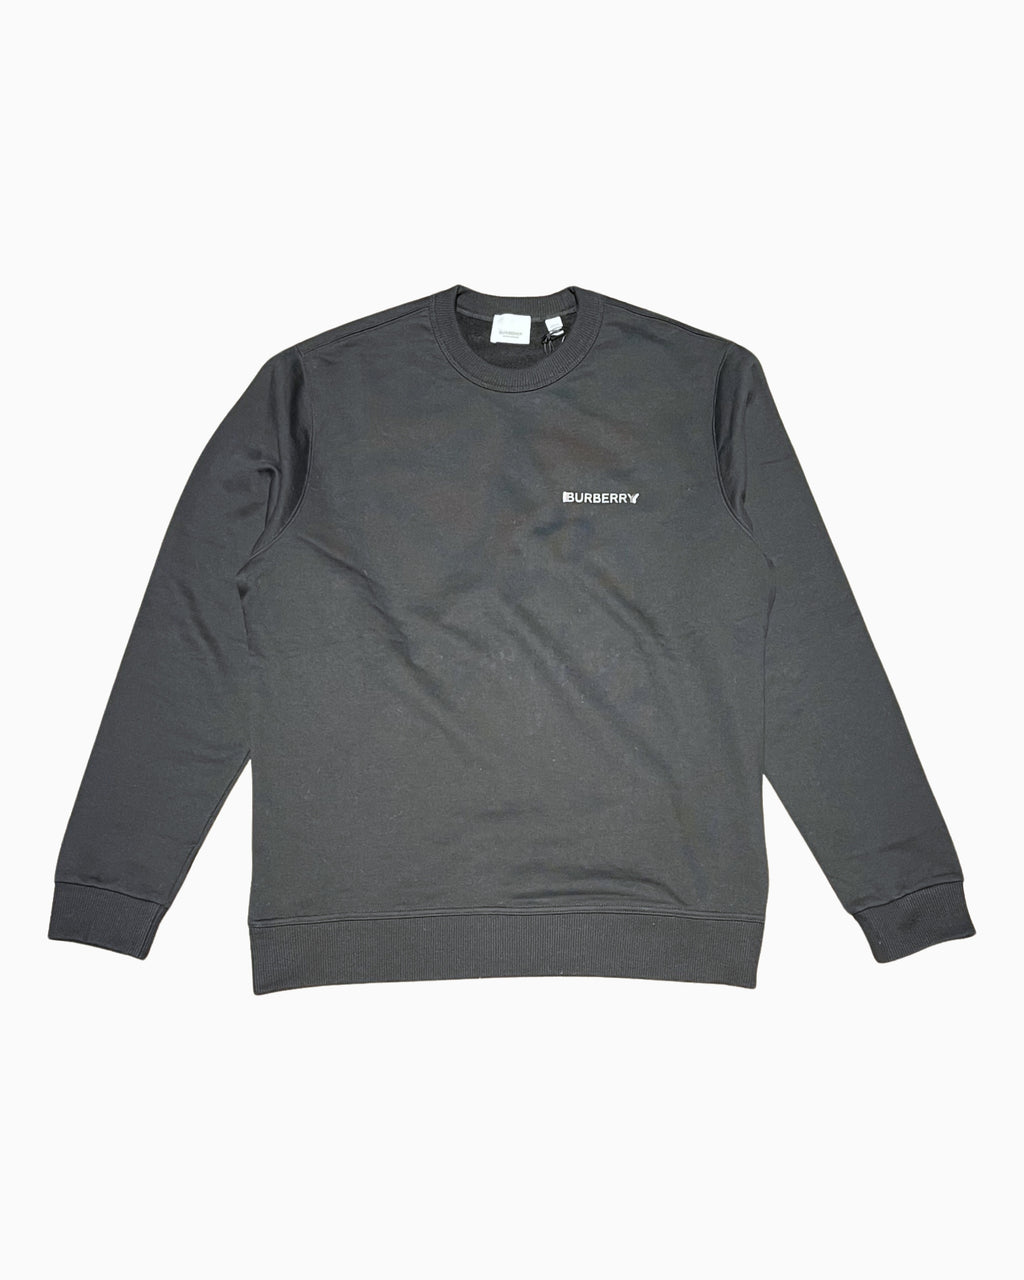 Burberry Jersey Sweatshirt  THE BRAND COMPANY - LAHORE MARKET